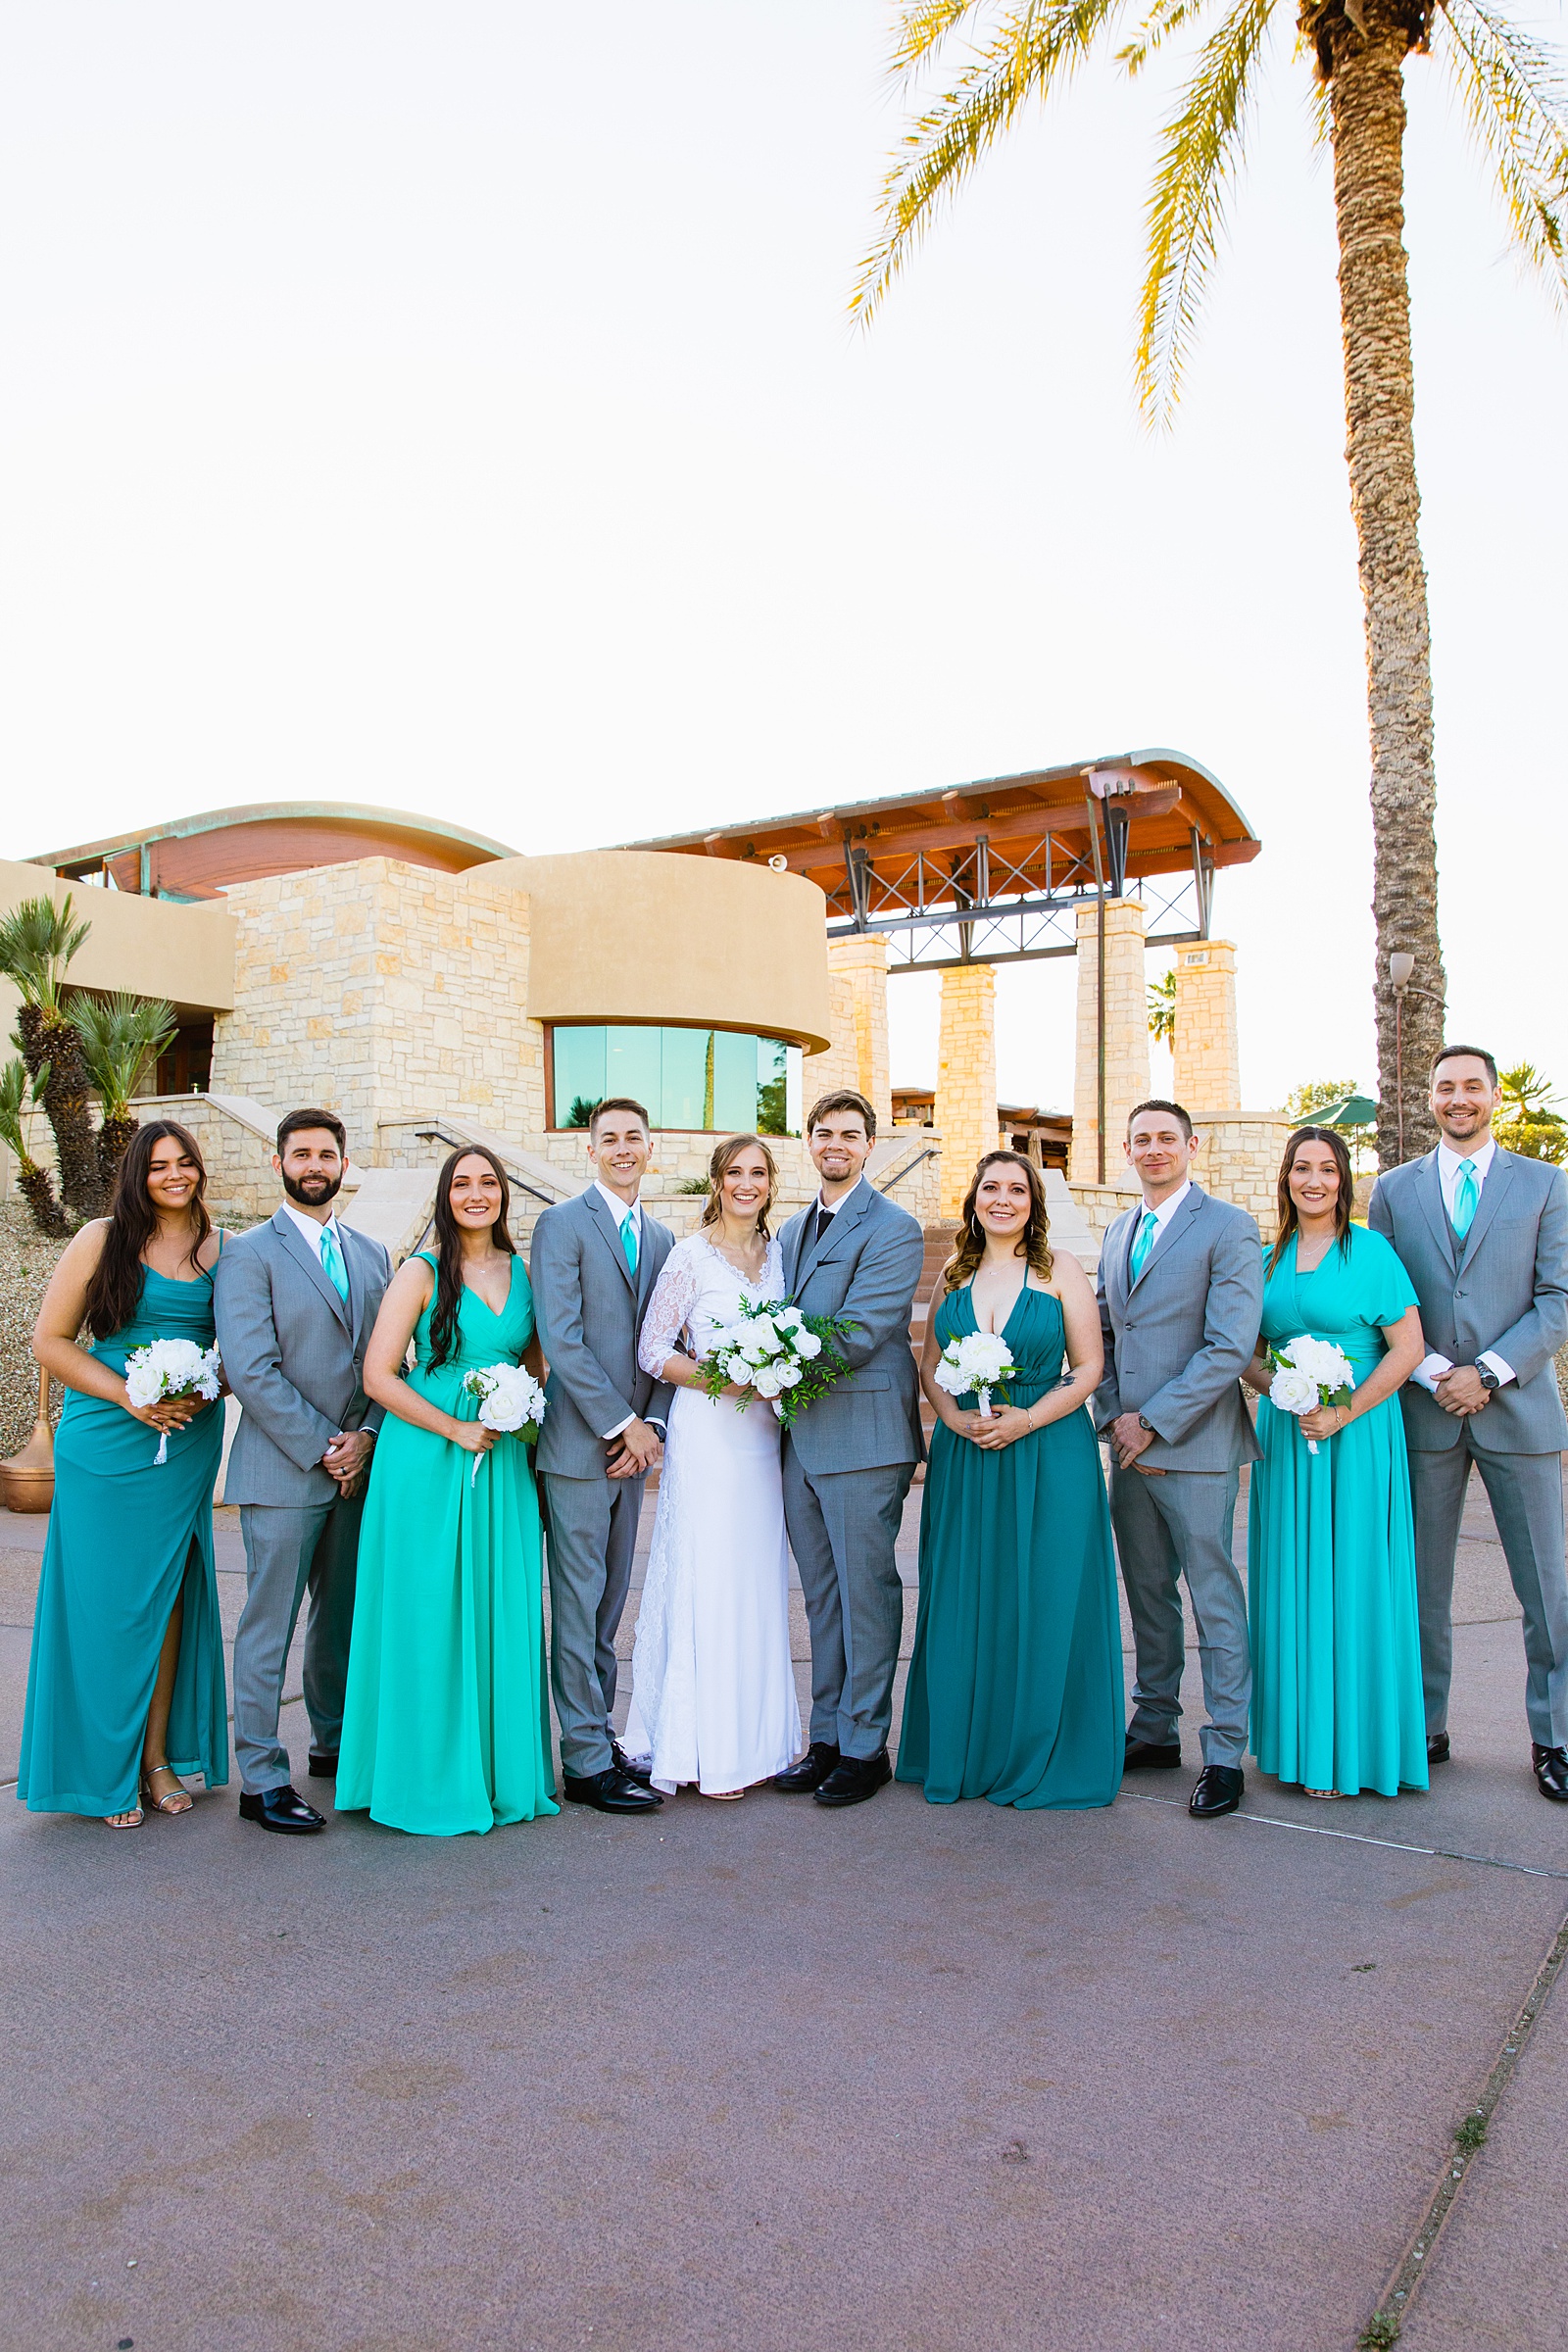 Bridal party together at a Ocotillo Oasis wedding by Arizona wedding photographer PMA Photography.